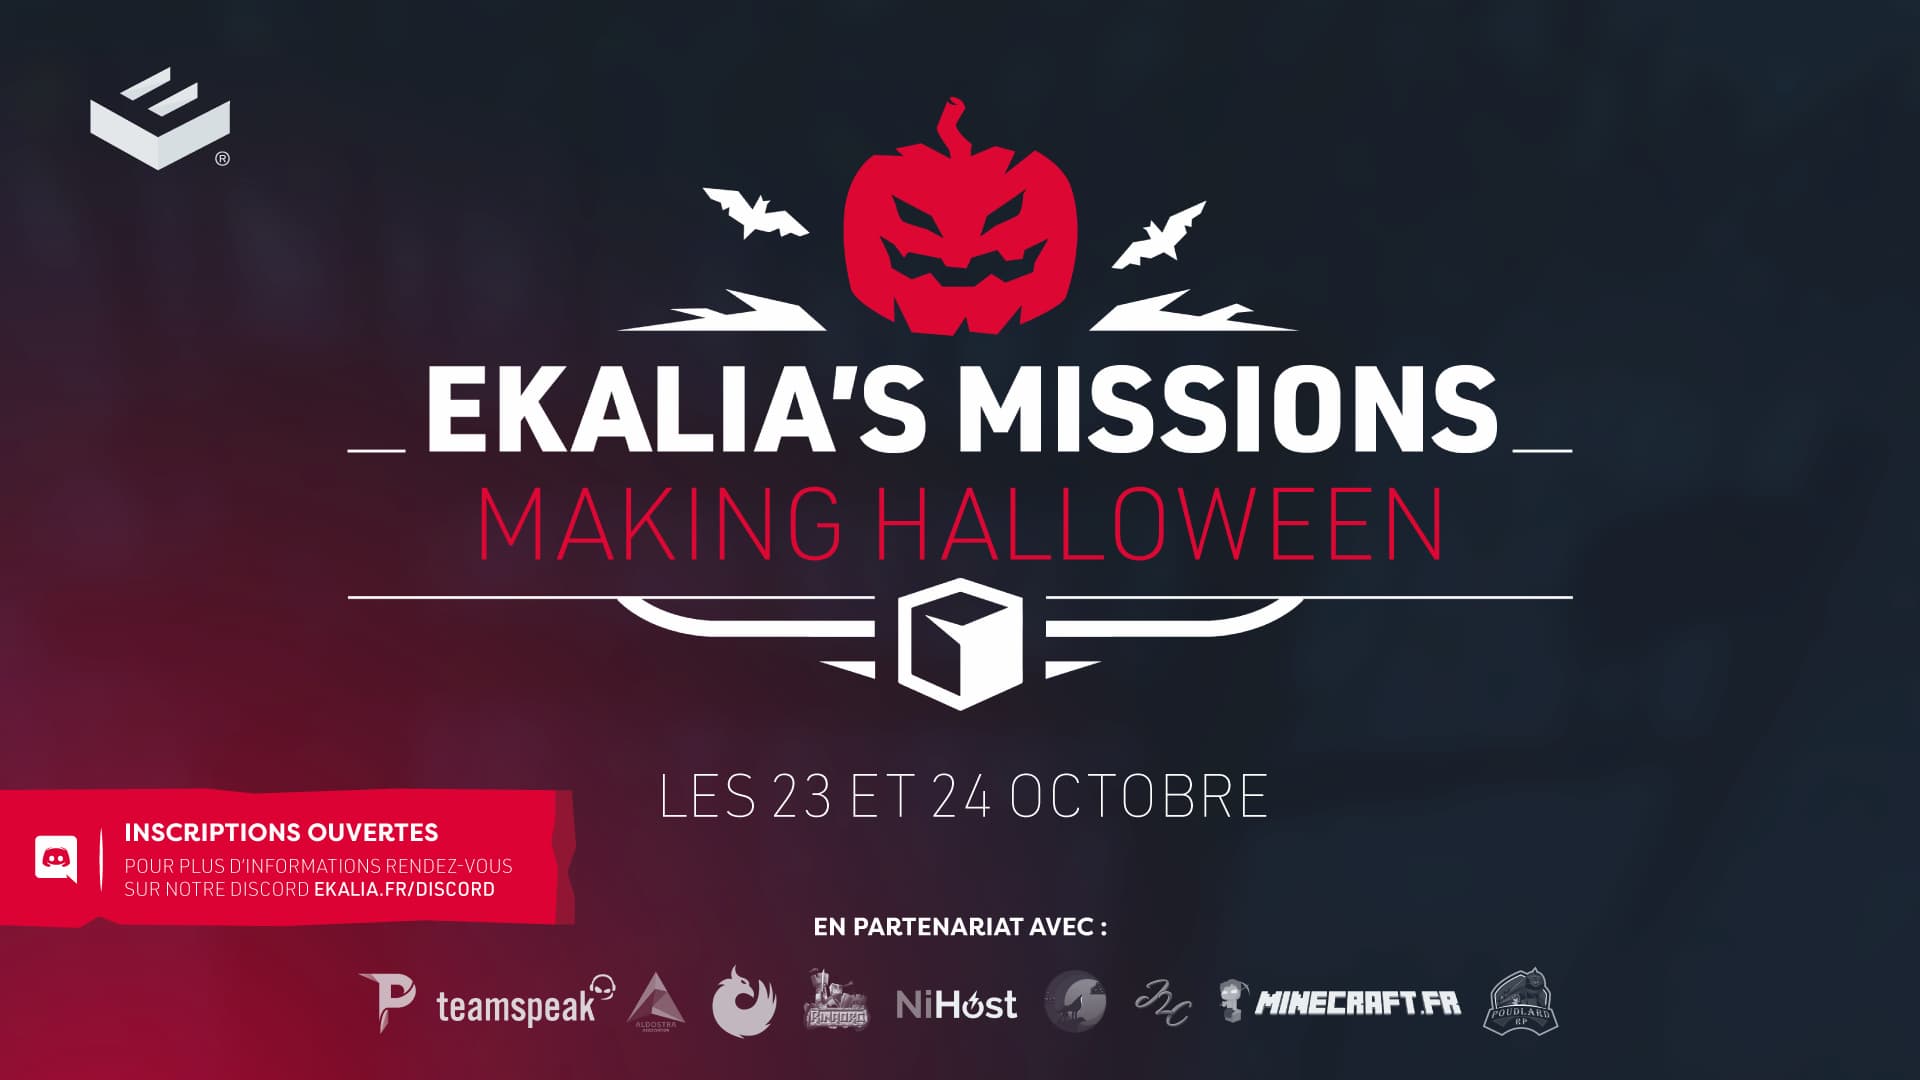 Ekalia's Mission: Making Halloween - Événement Minecraft